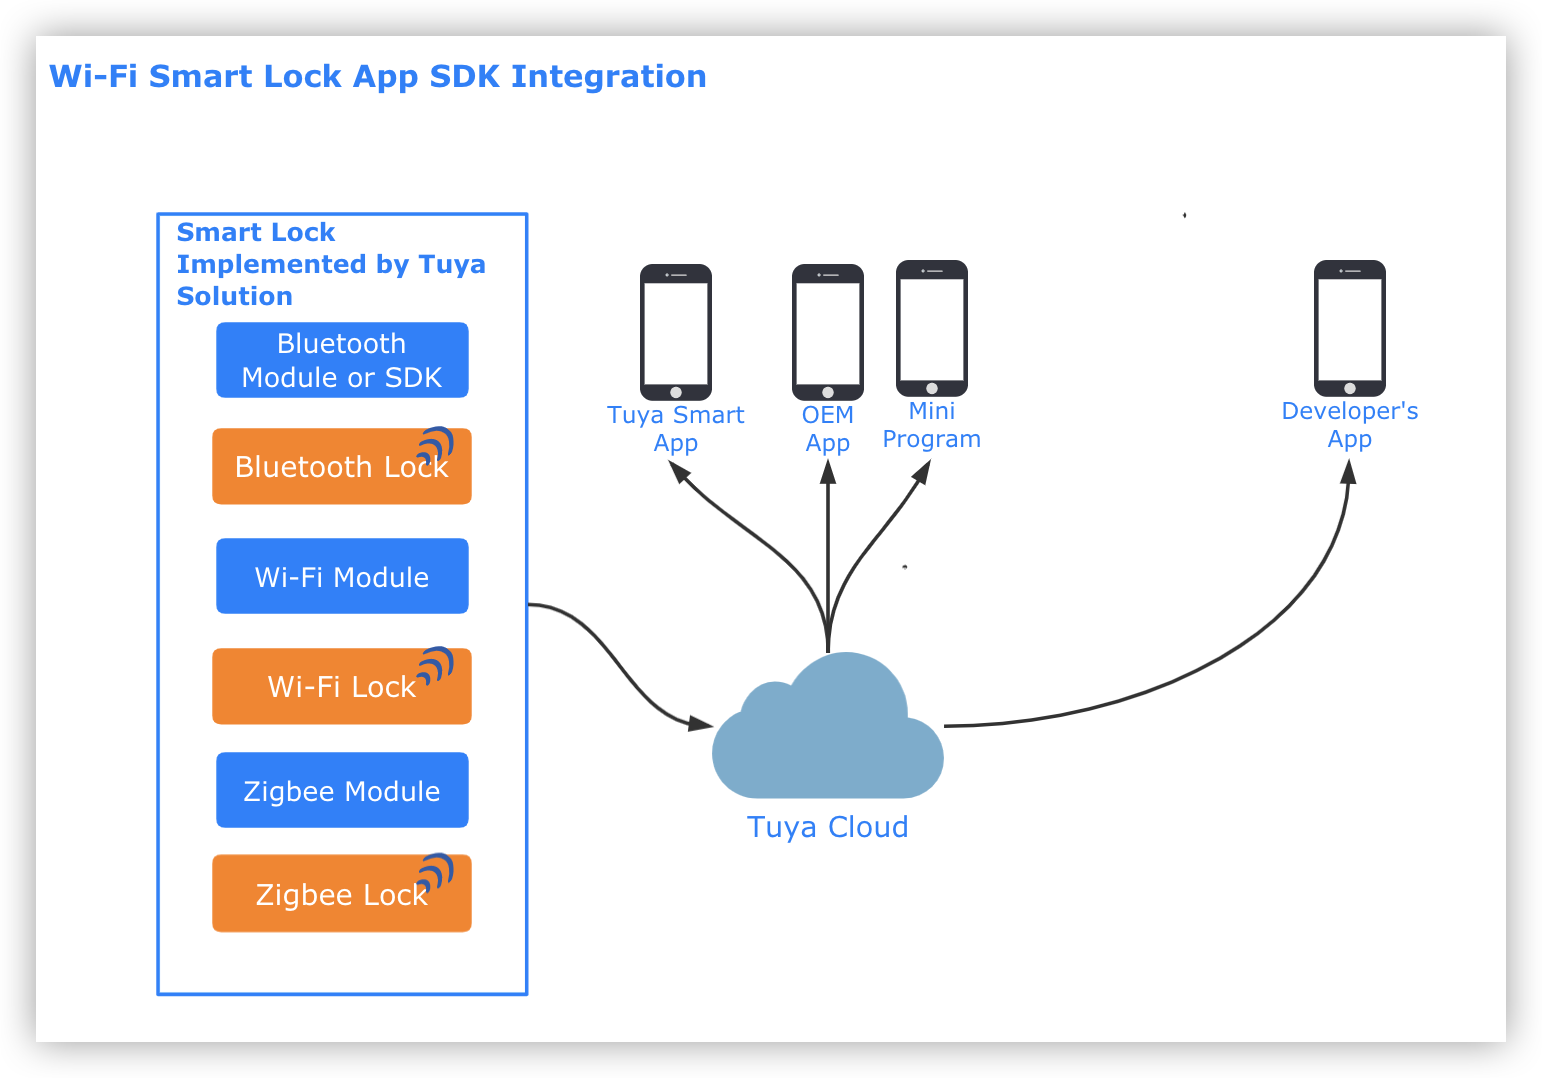 Integrate smart lock app SDKs provided by Tuya